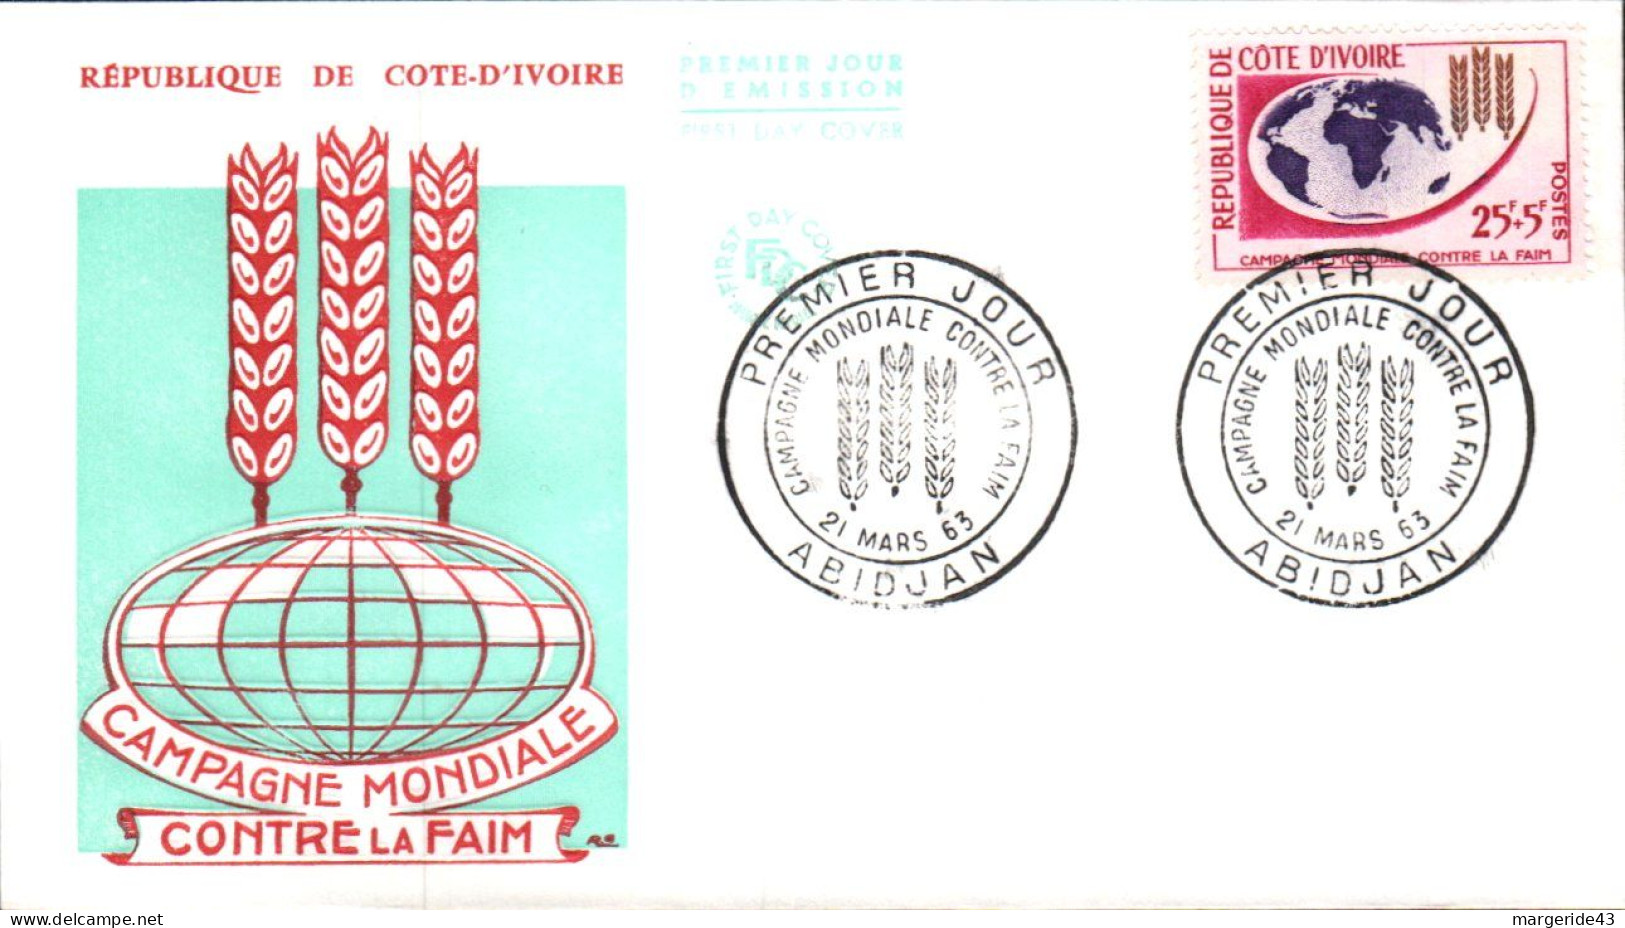 COTE D'IVOIRE FDC 1963 CAMPAGNE CONTRE LA FAIM - Costa De Marfil (1960-...)